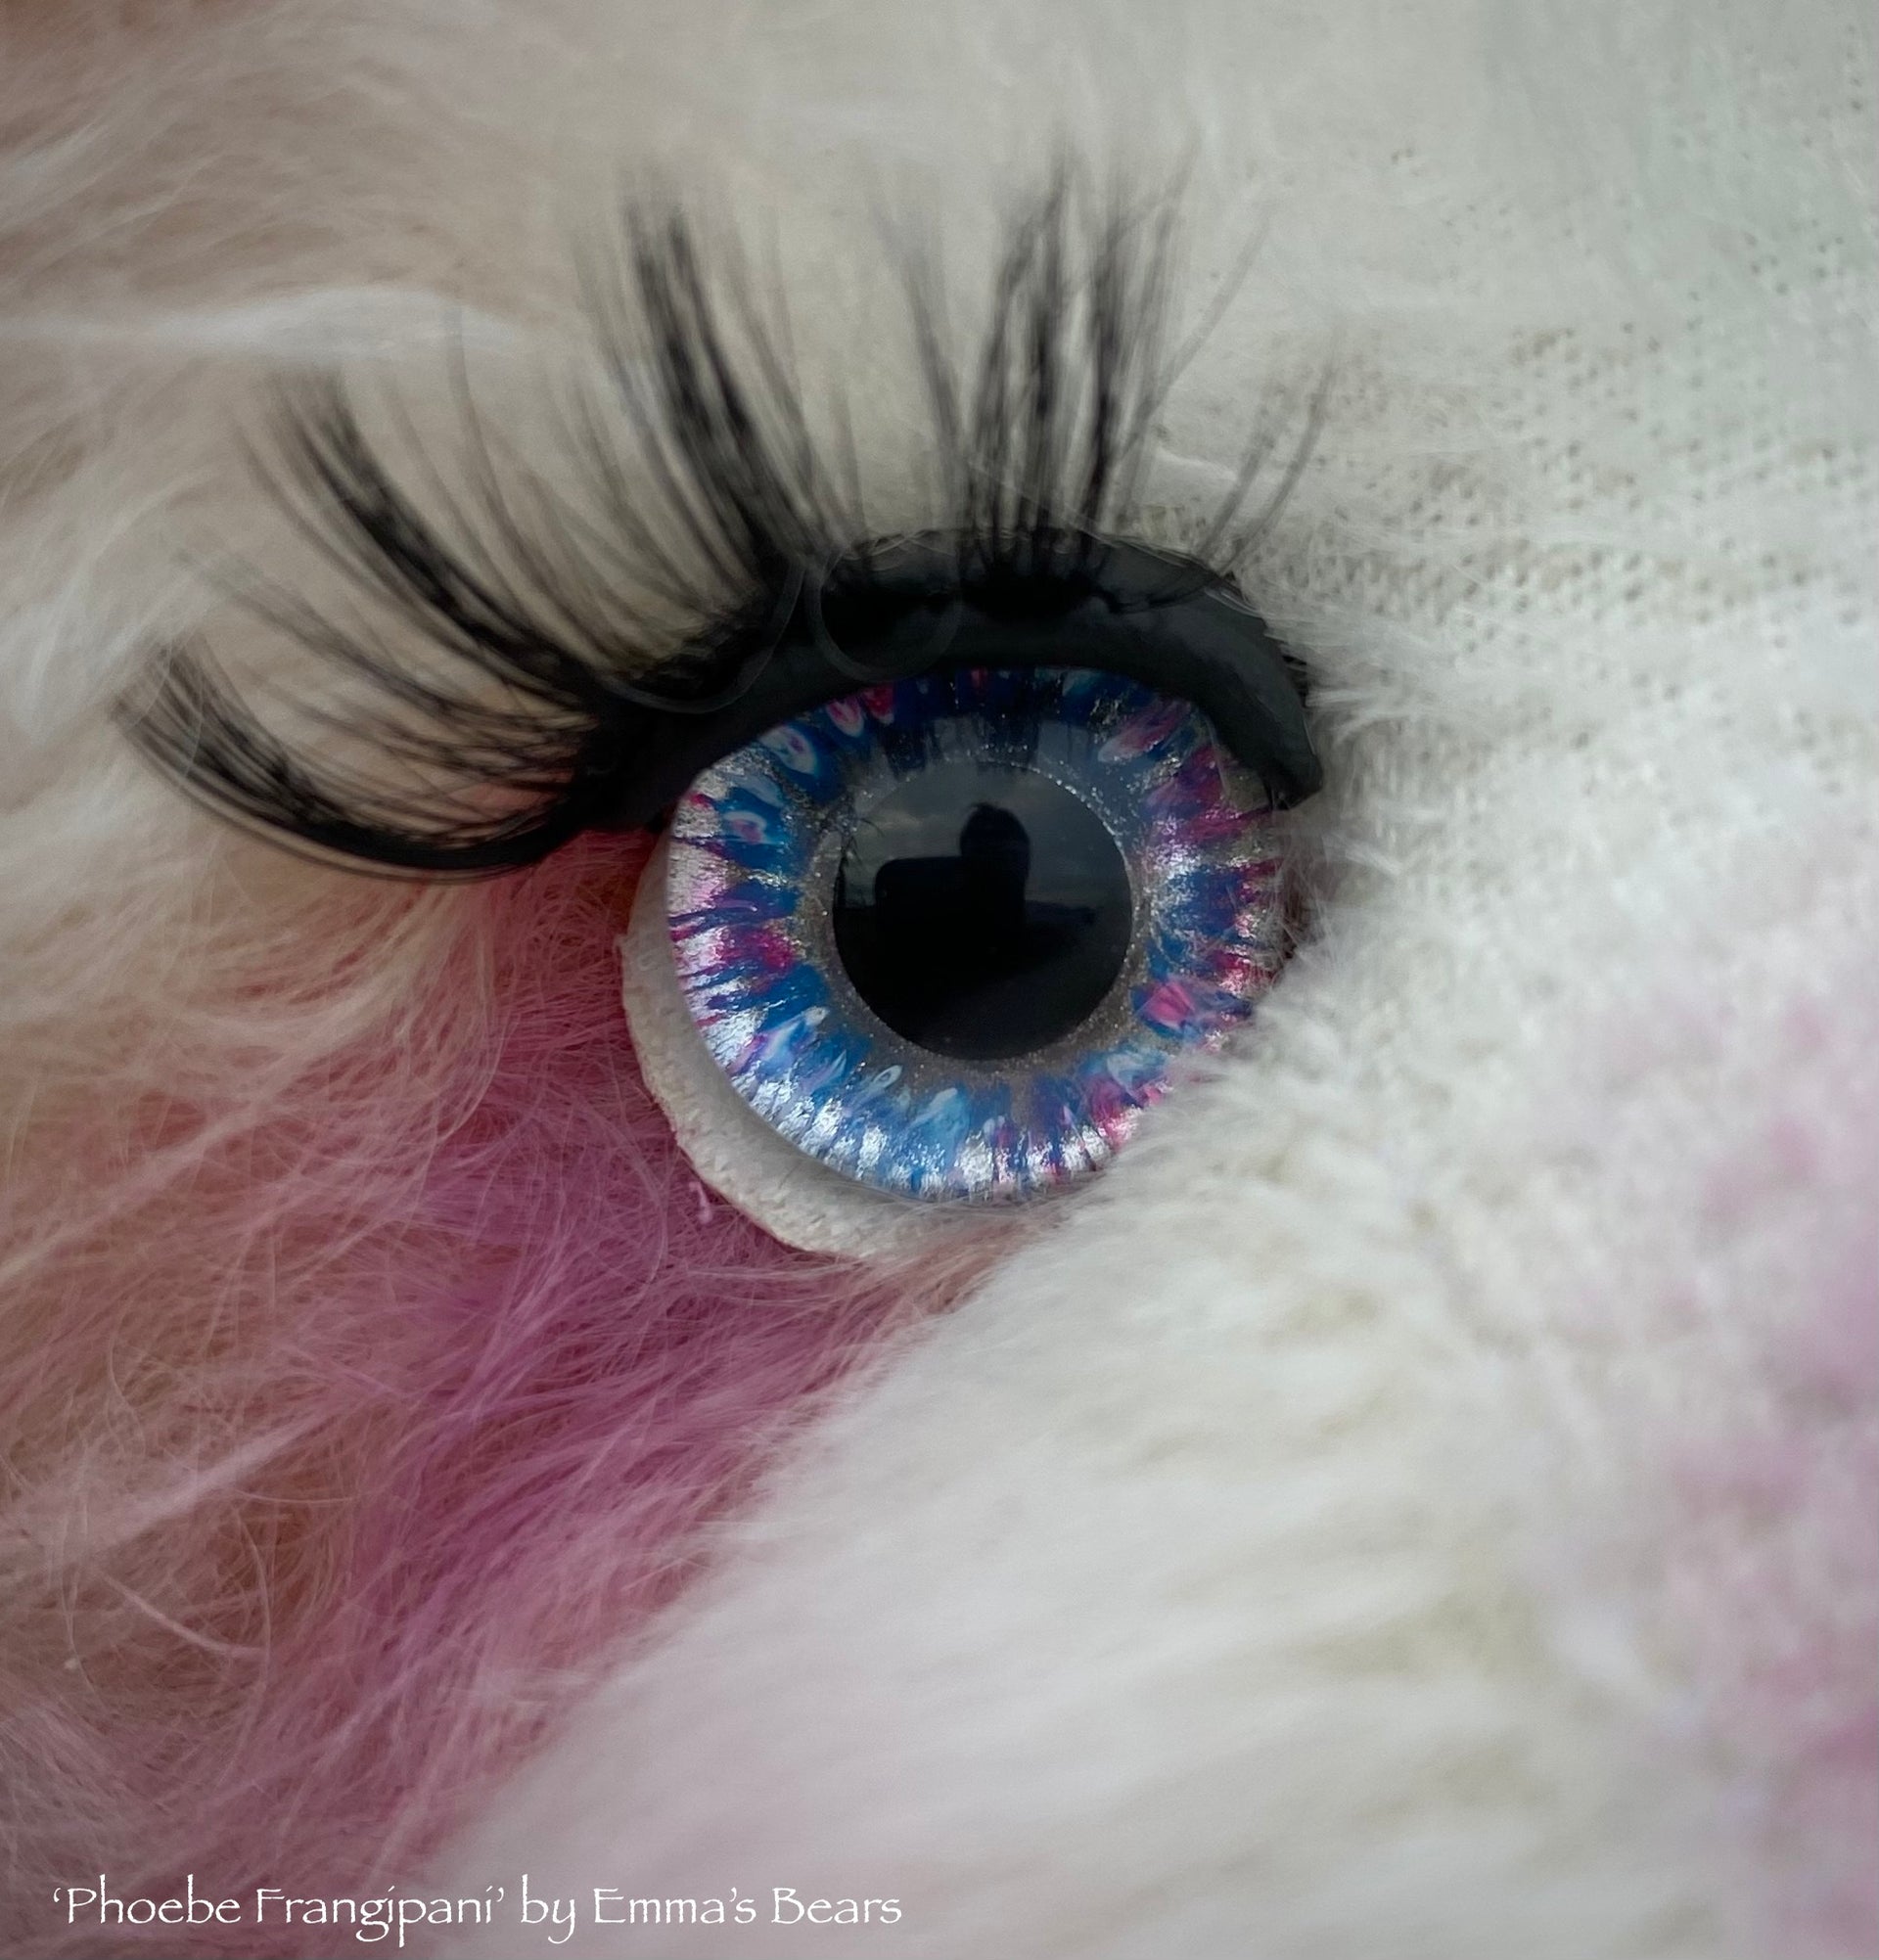 Phoebe Frangipani - 18" Hand-dyed Mohair Artist Baby Bear by Emmas Bears - OOAK